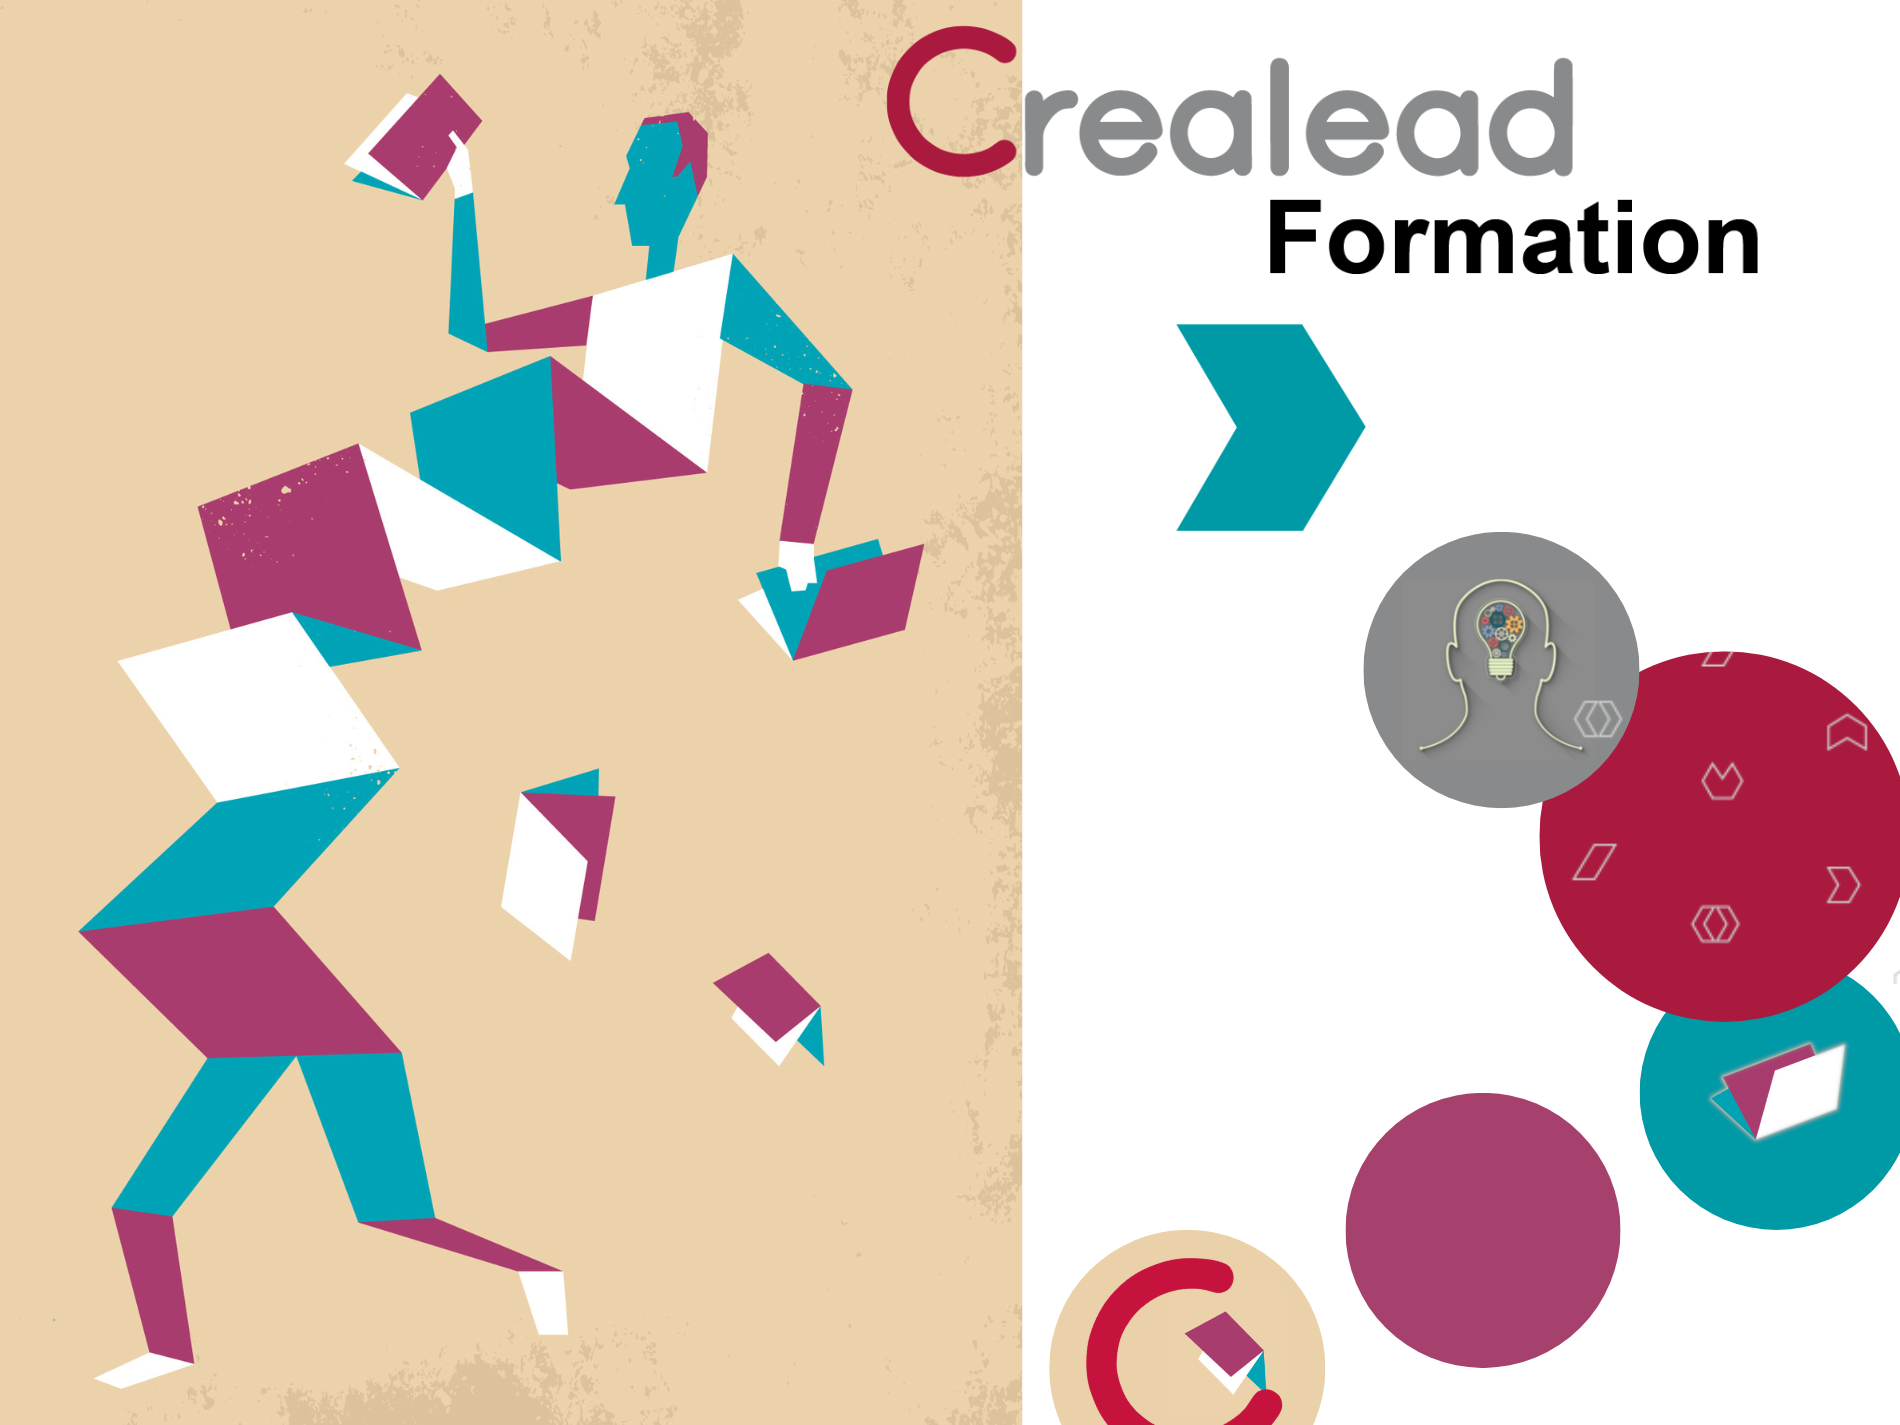 Crealead Formation